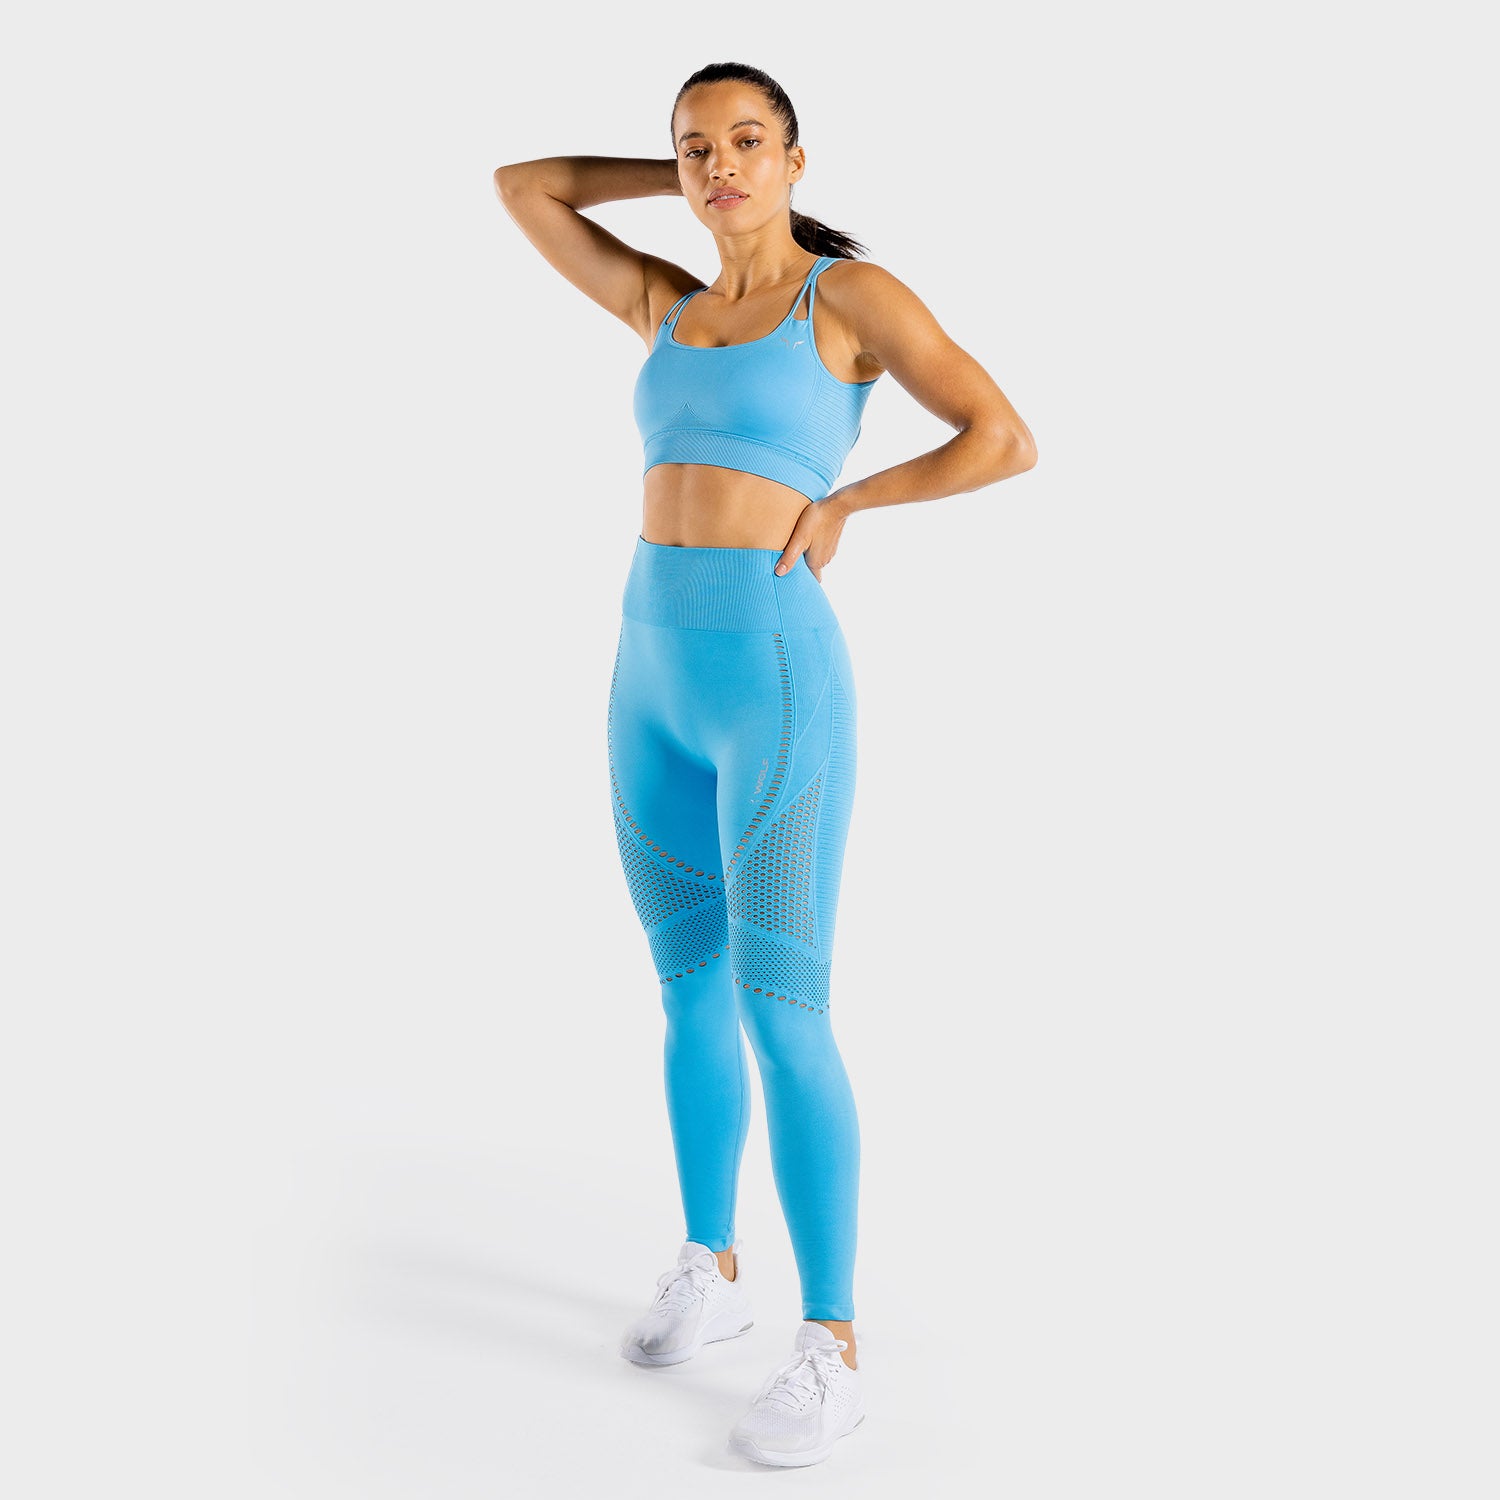 squatwolf-sports-bra-for-gym-meta-sports-bra-sky-blue-workout-clothes